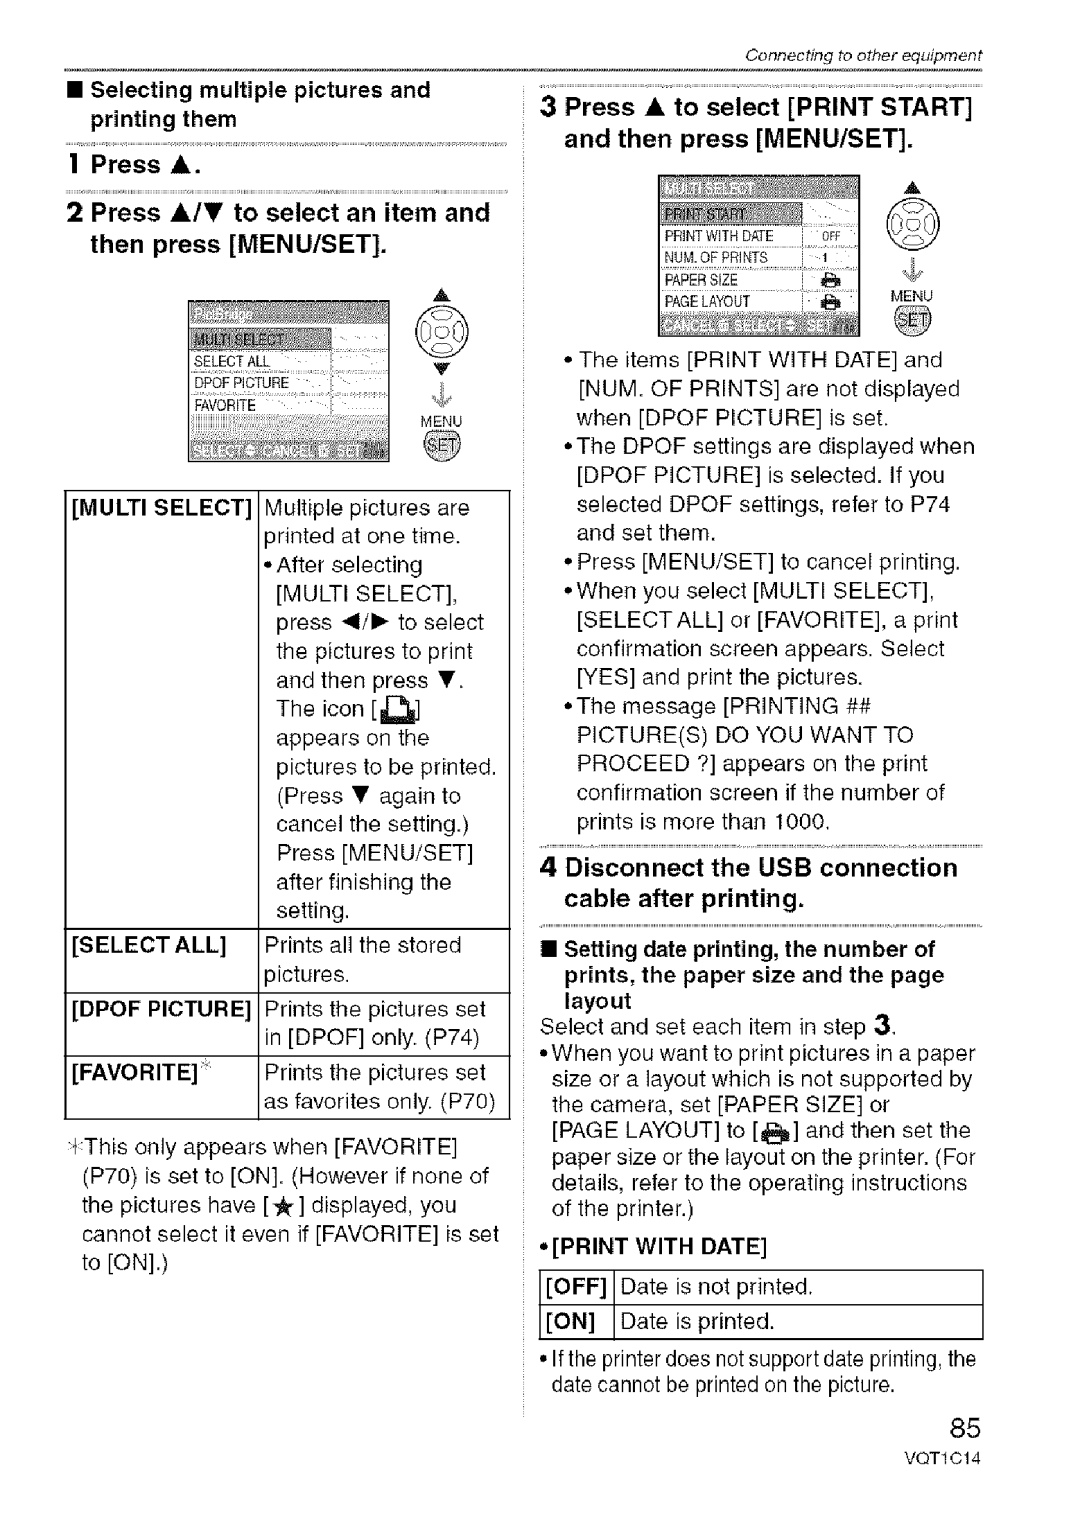 Panasonic DMC-FX10, DMC-FX12 operating instructions Press to select Print Start Then press MENU/SET, Print with Date 